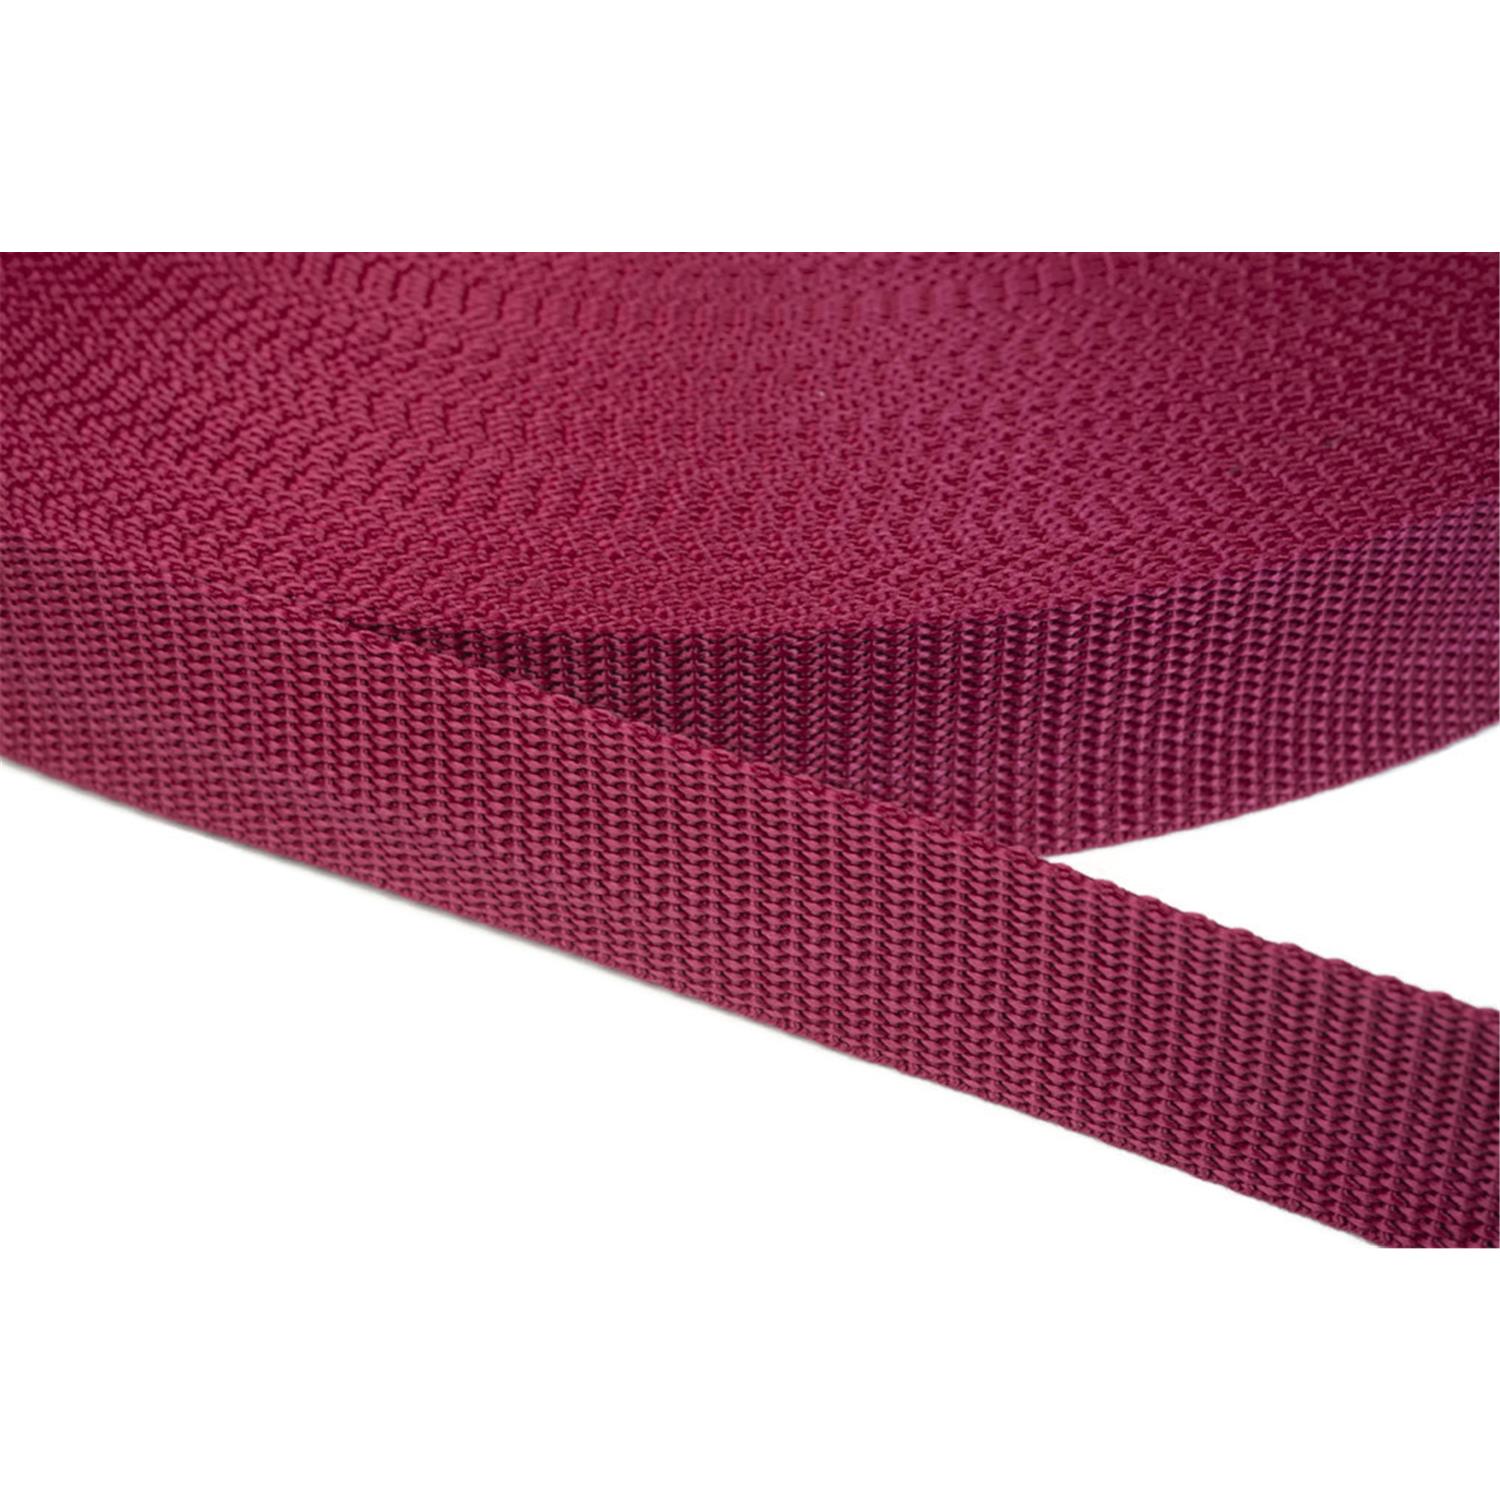 Gurtband 50mm breit aus Polypropylen in 41 Farben 21 - dunkelrot 50 Meter